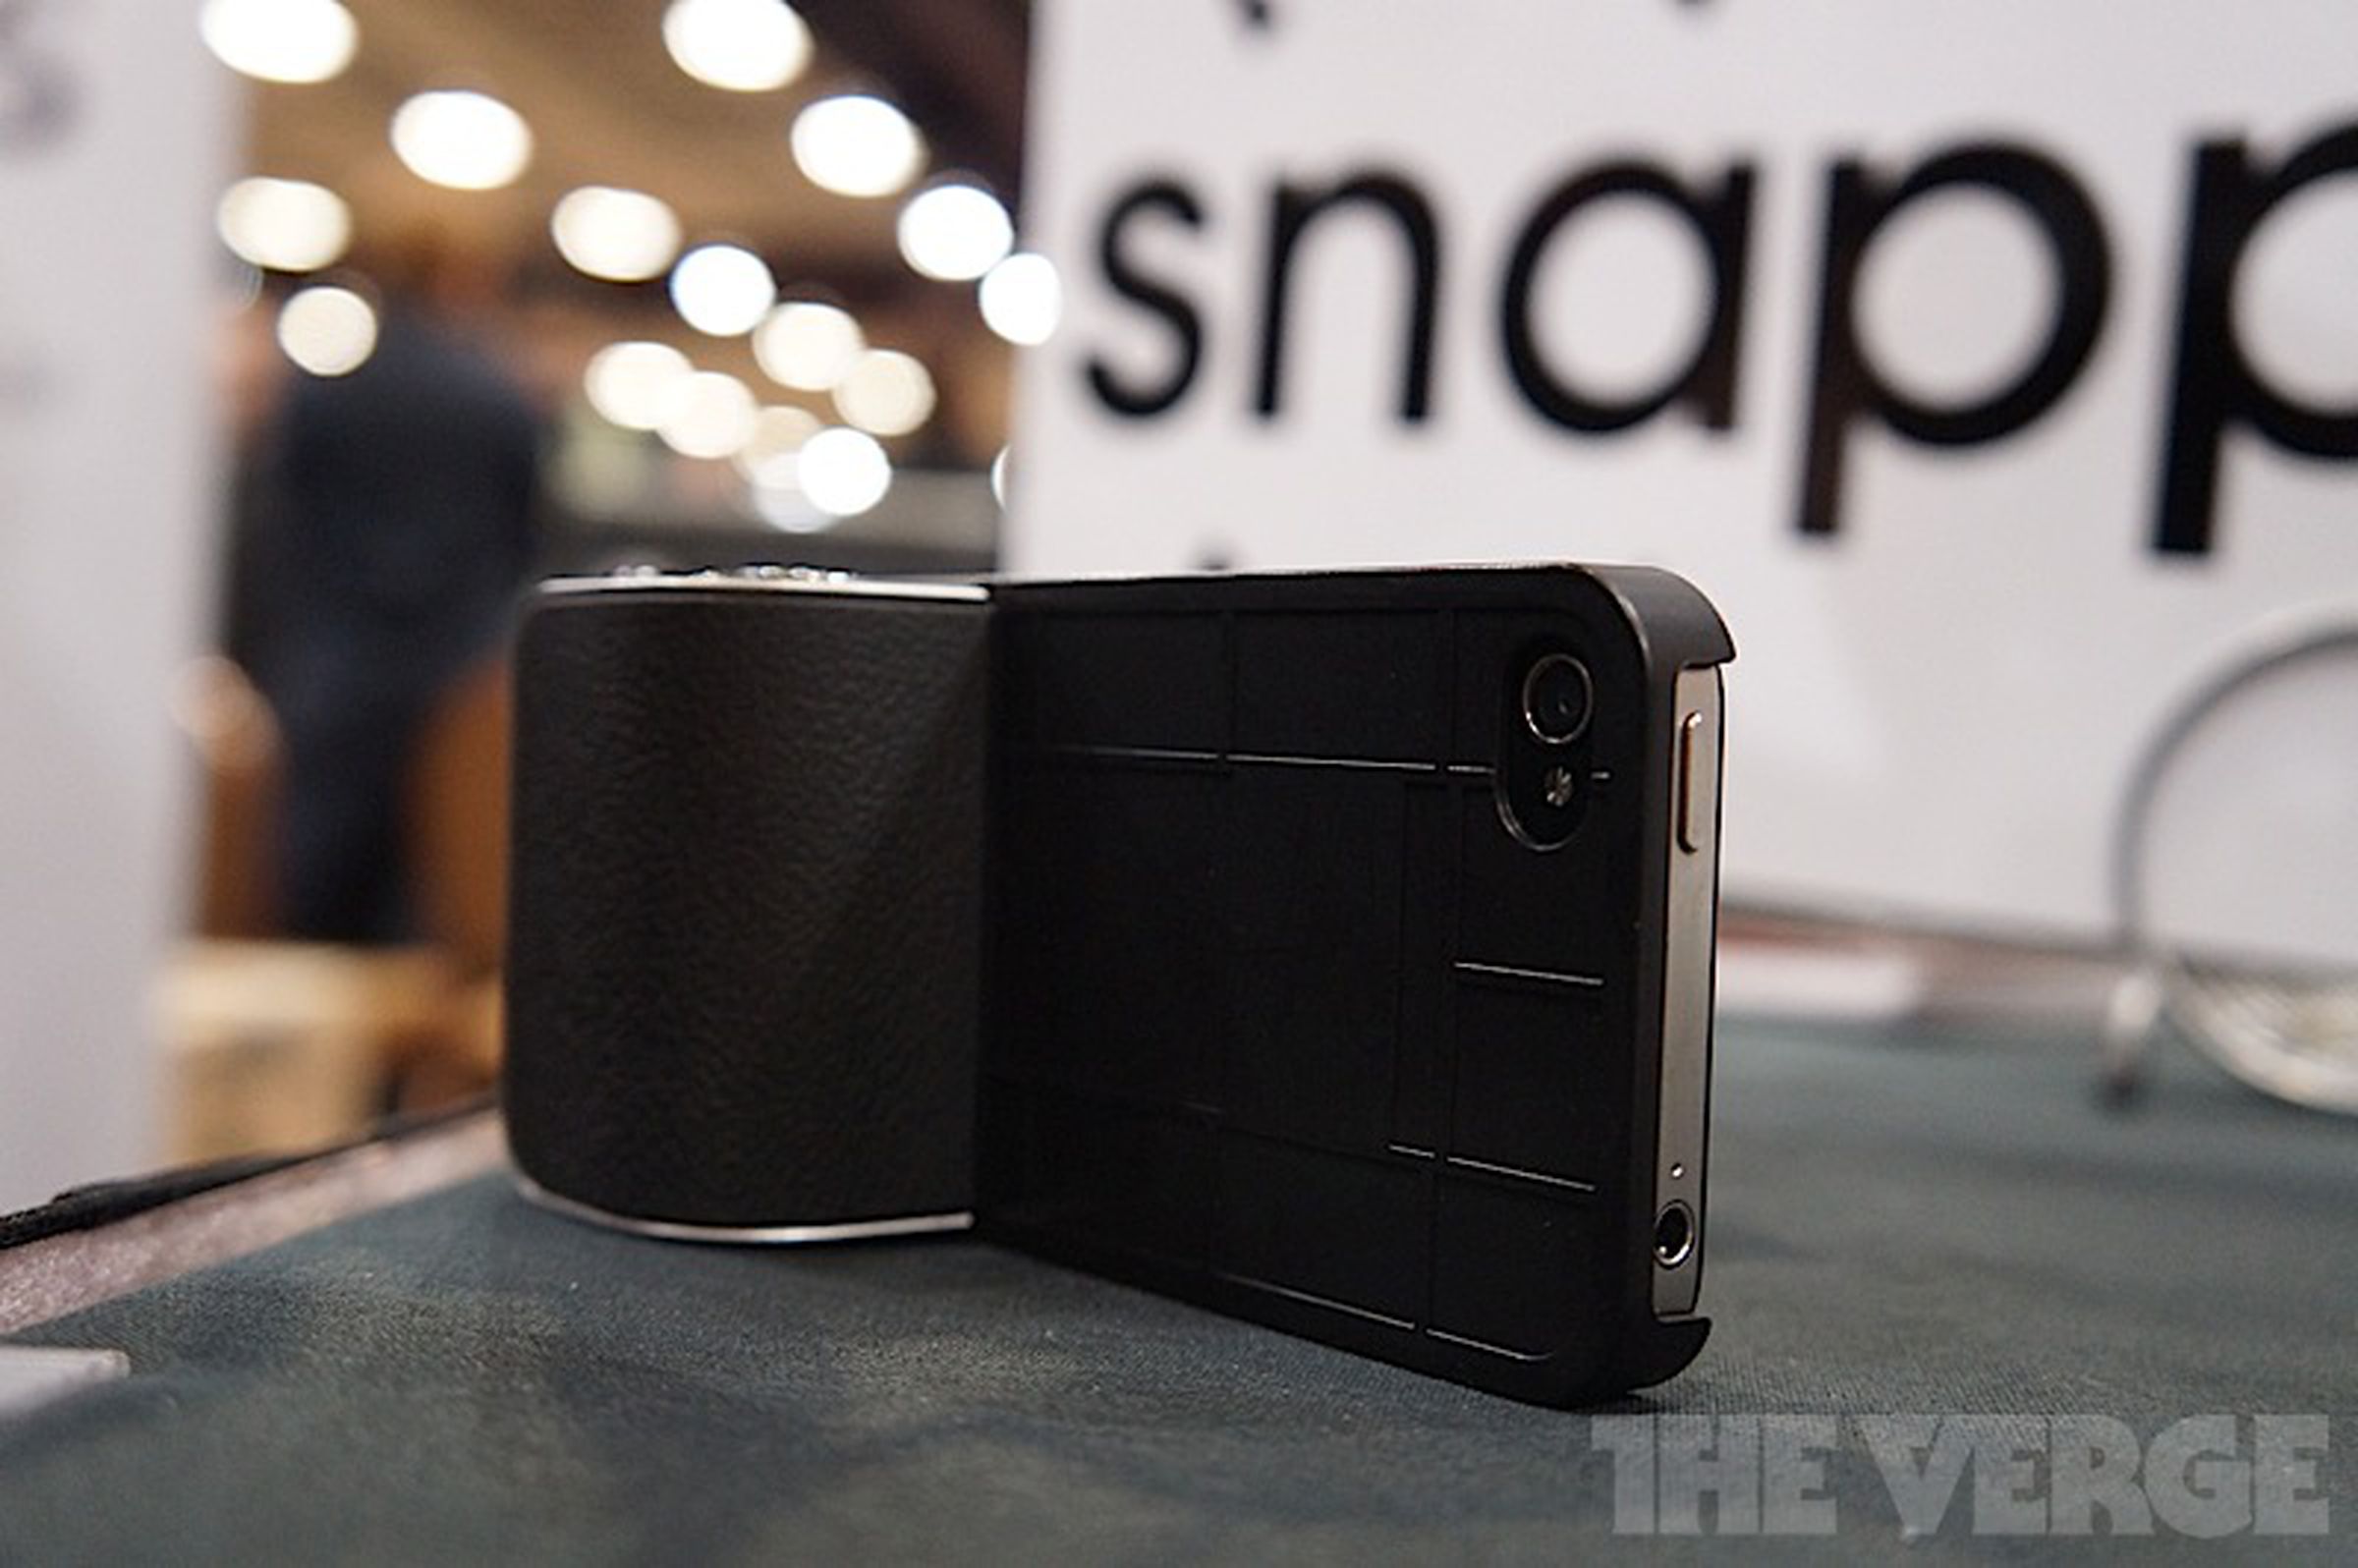 Snappgrip iPhone camera controller hands-on photos